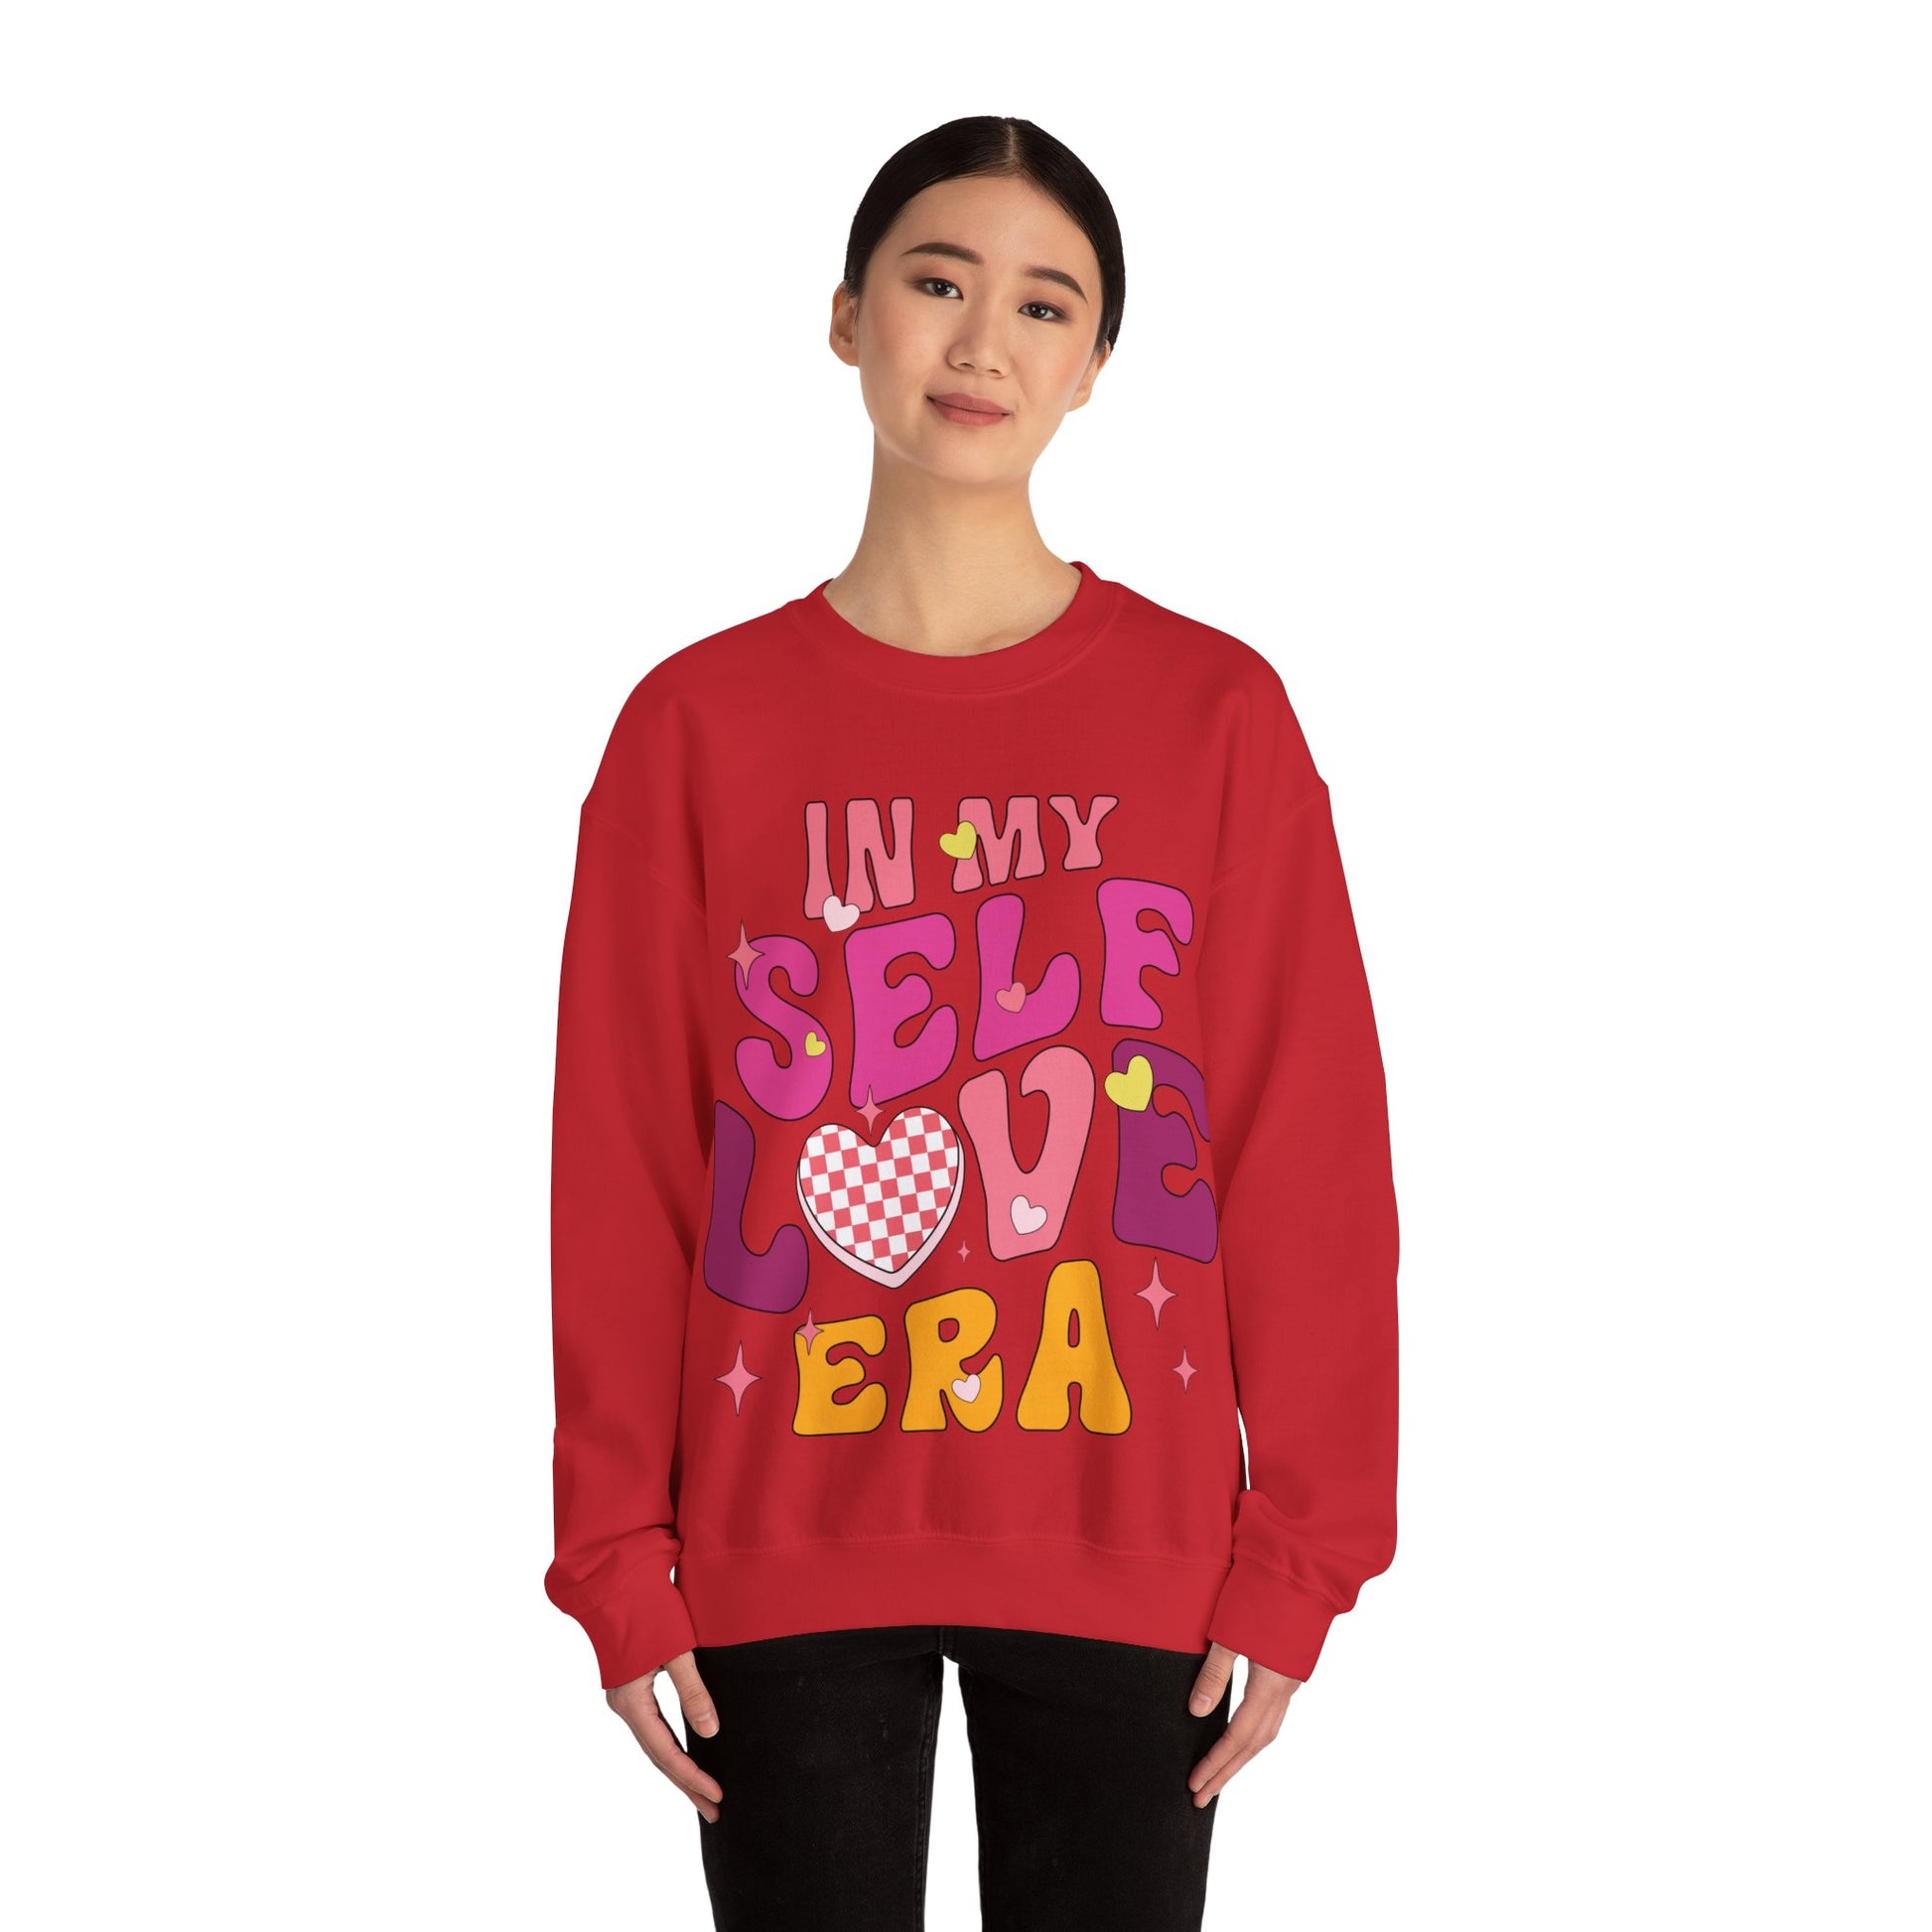 self love era sweatshirt